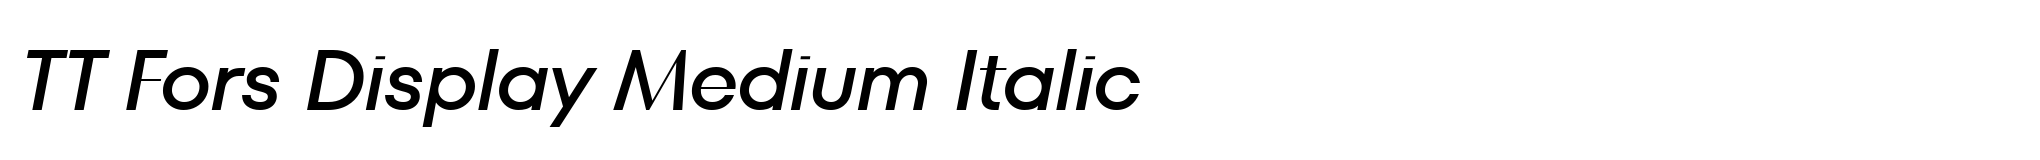 TT Fors Display Medium Italic image